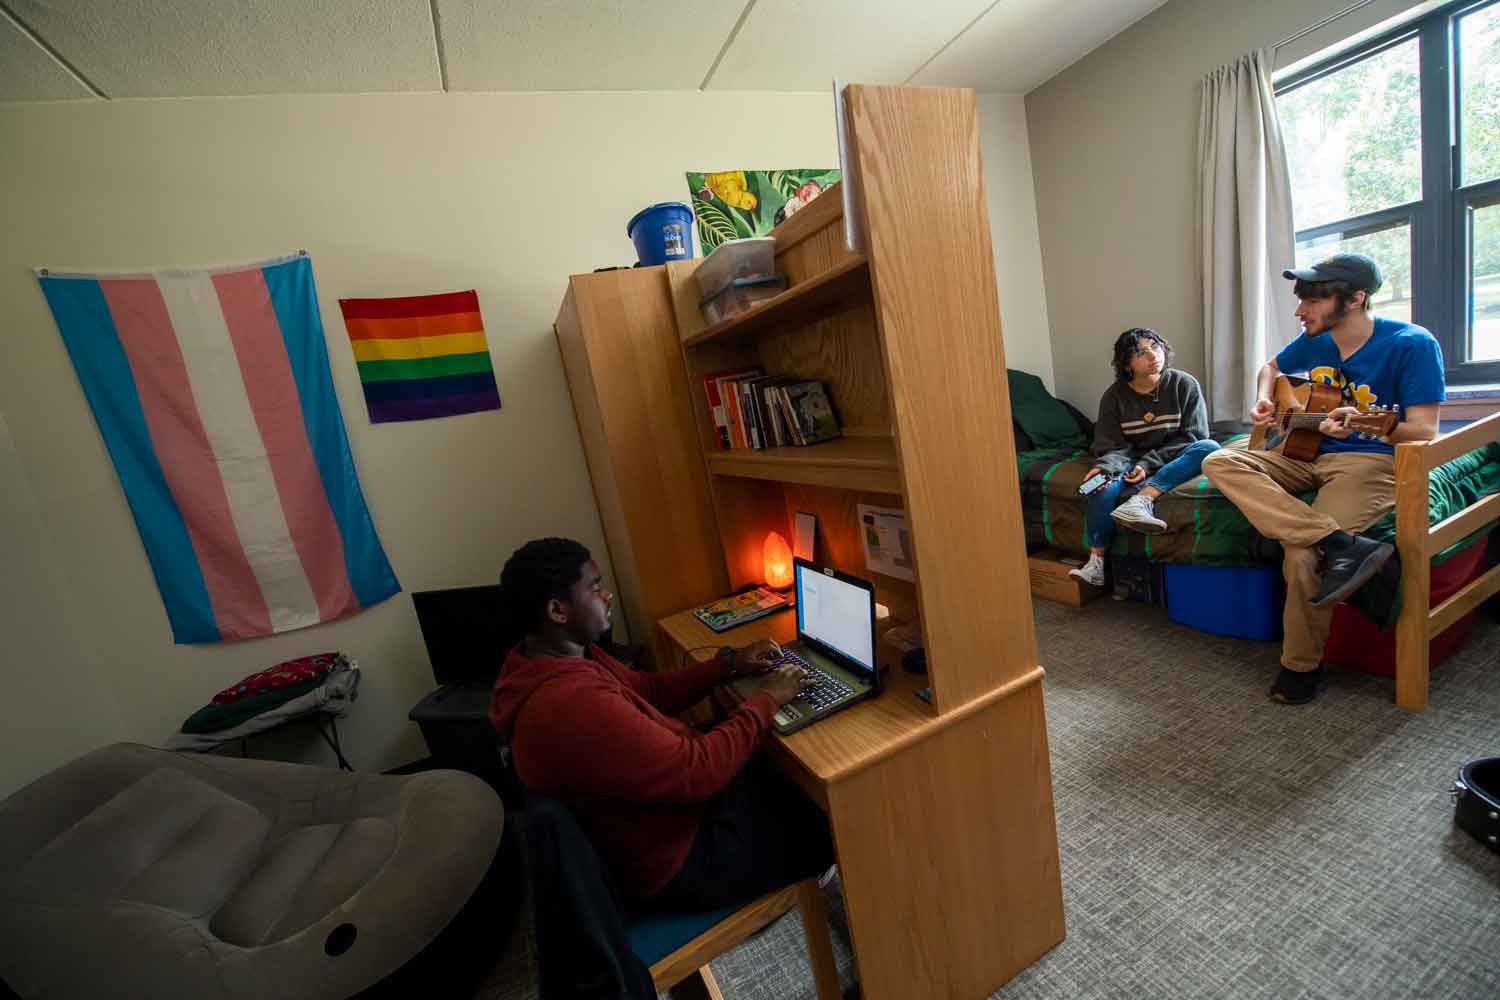 Gender Inclusive Housing in LA